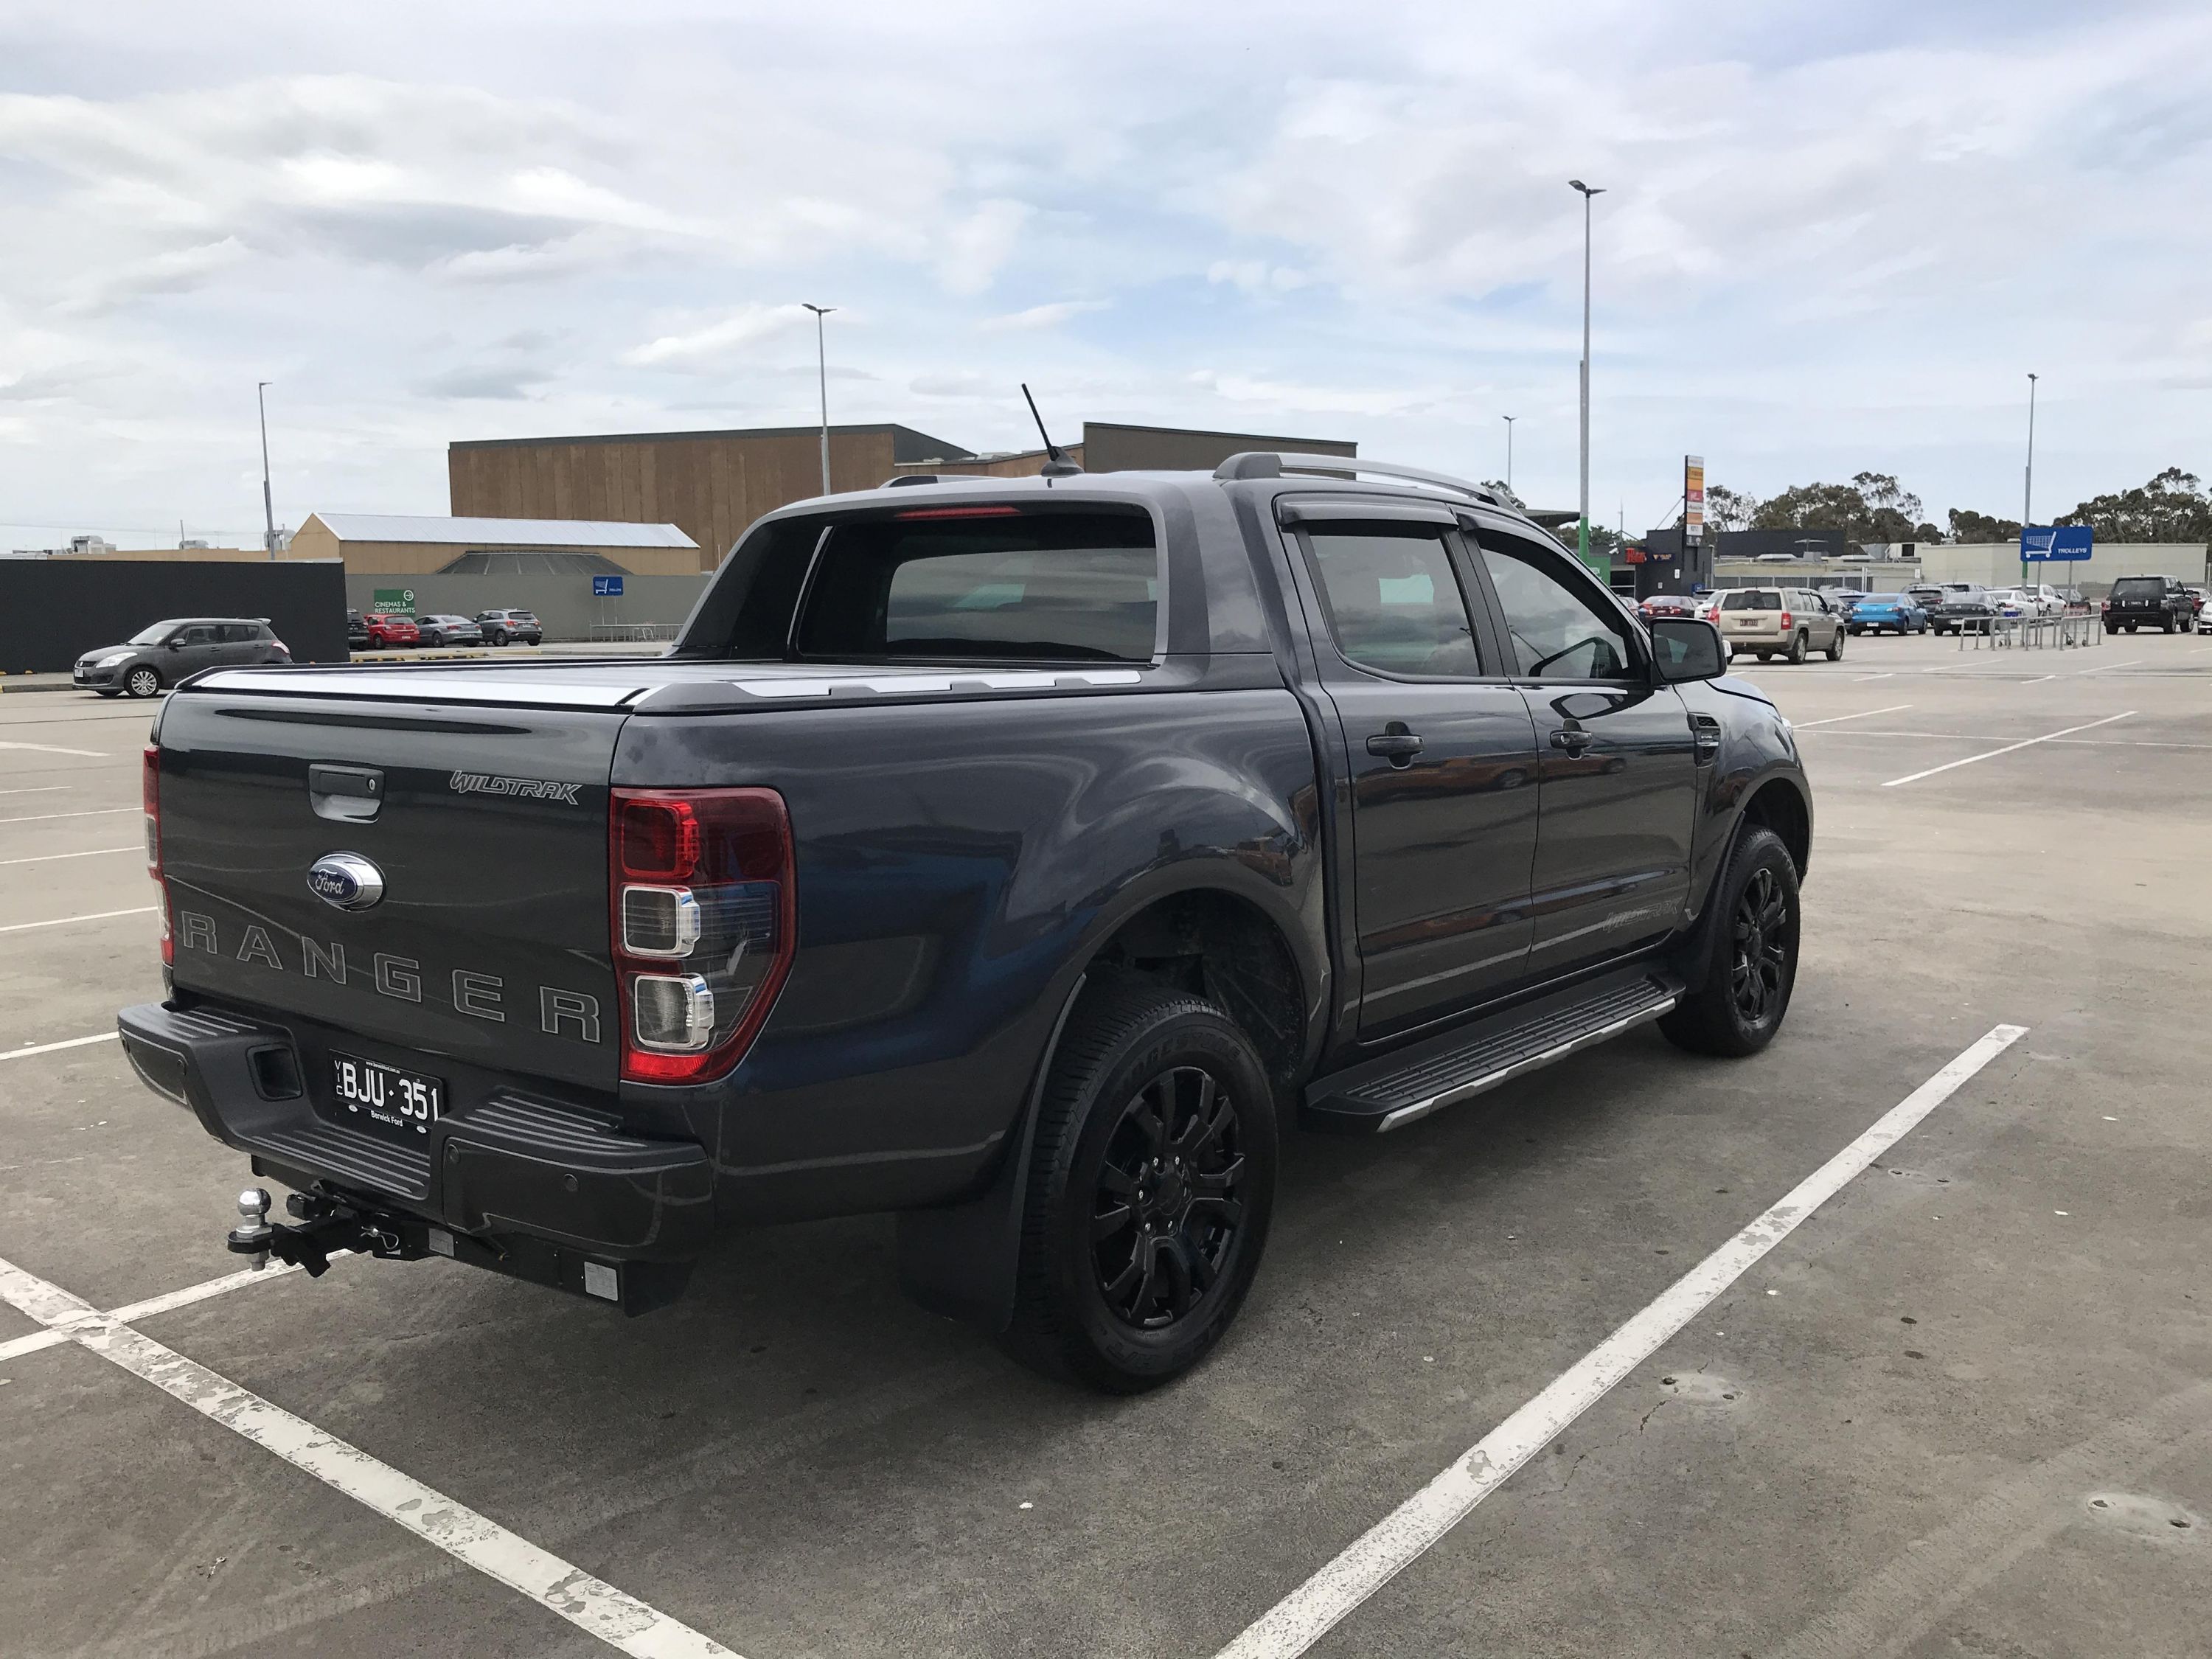 2019 Ford Ranger Wildtrak 2.0 (4x4) Review - Drive